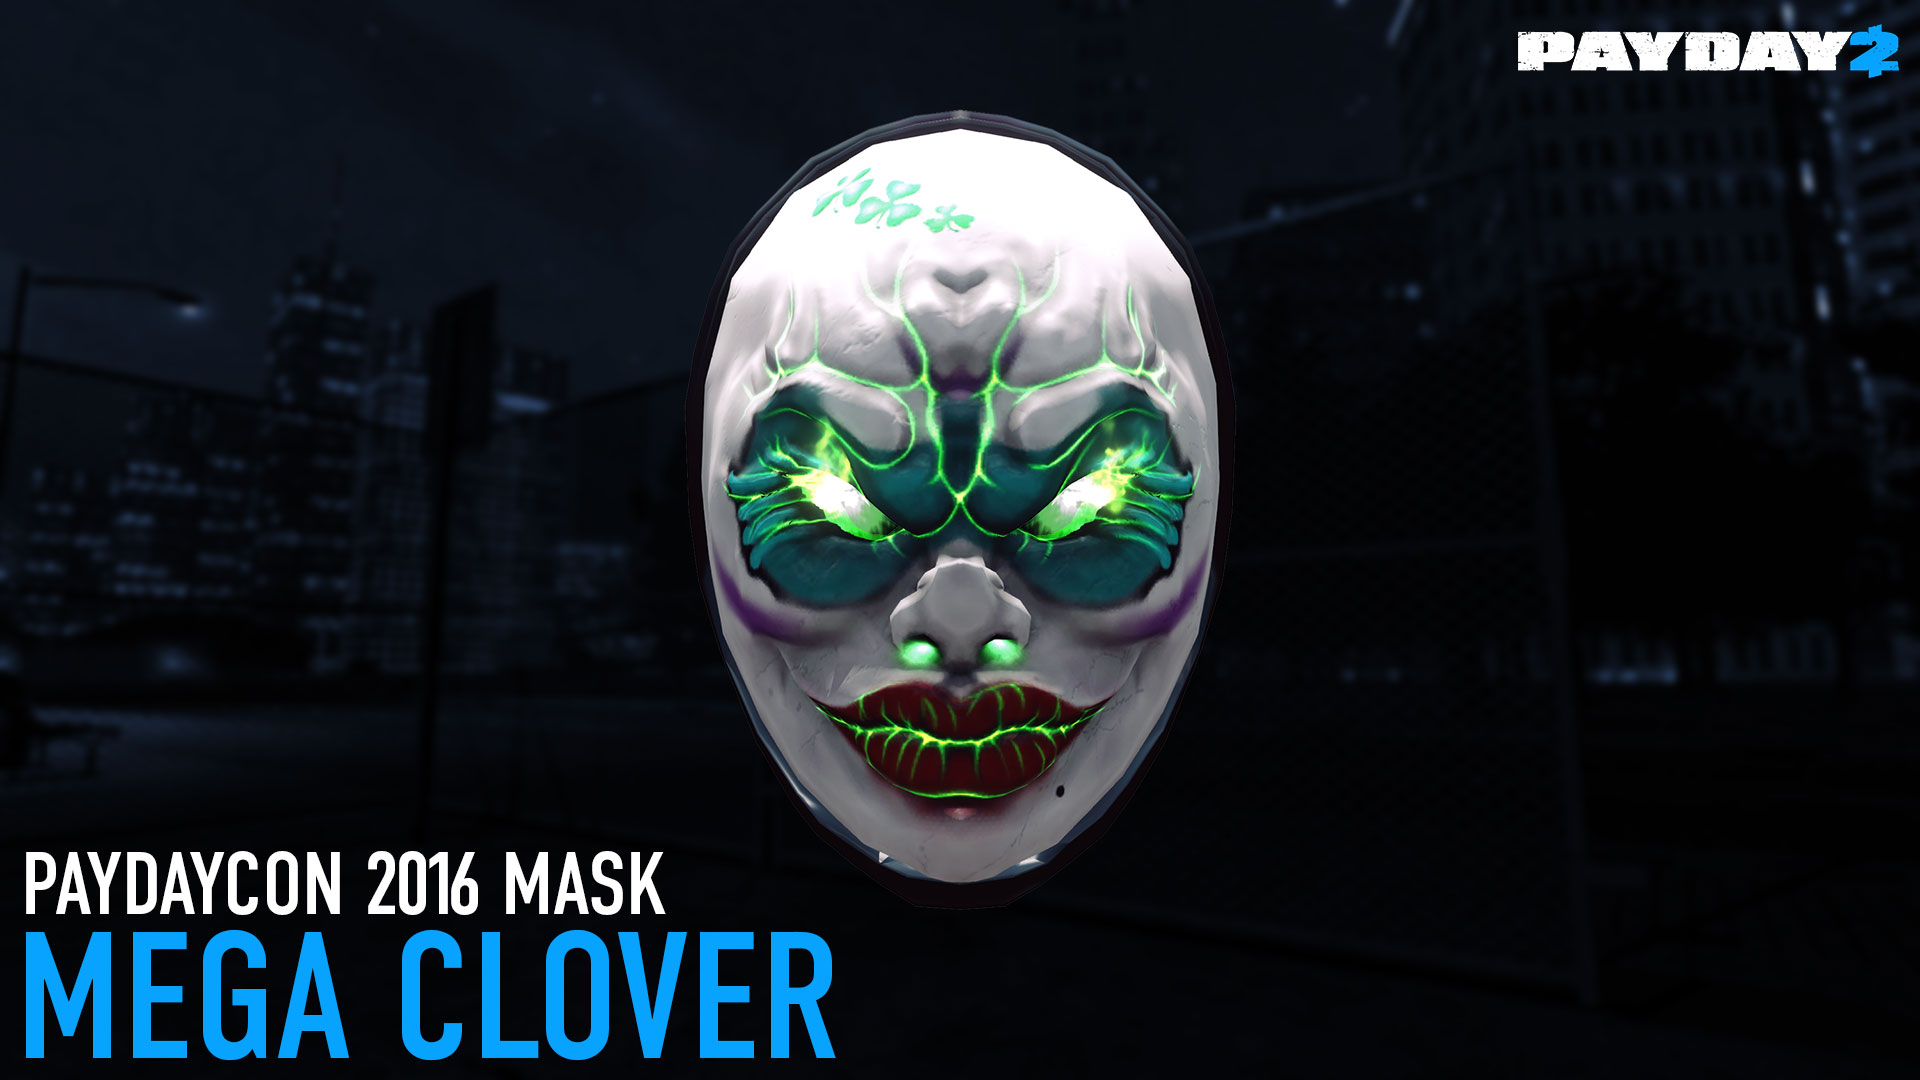 PAYDAY 2 - Mega Clover Mask (PAYDAYCON 2016) DLC Steam CD Key 5.64 $